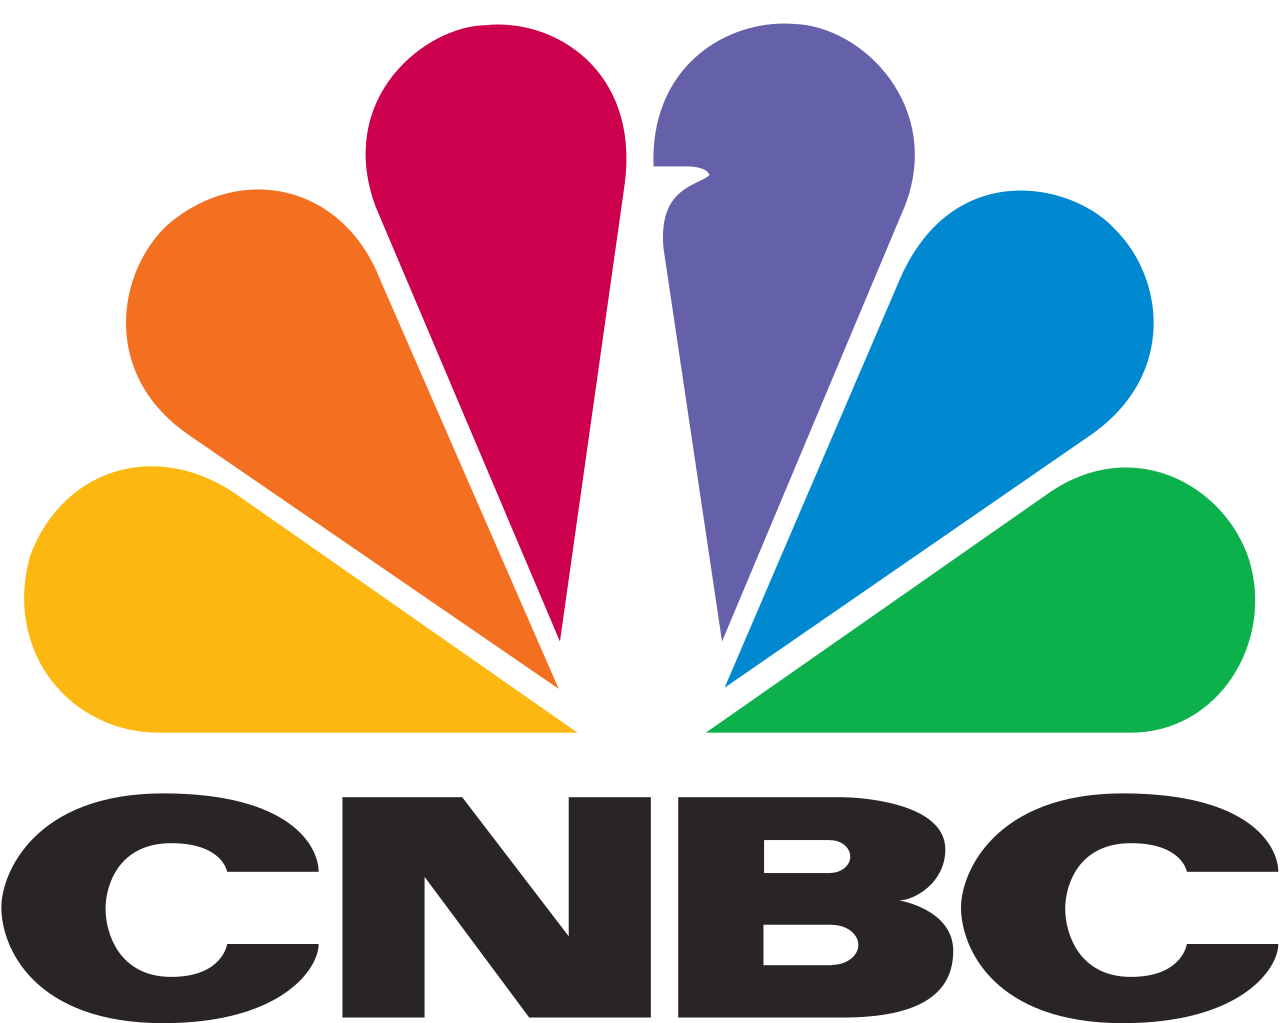 1280px-CNBC_logo.png